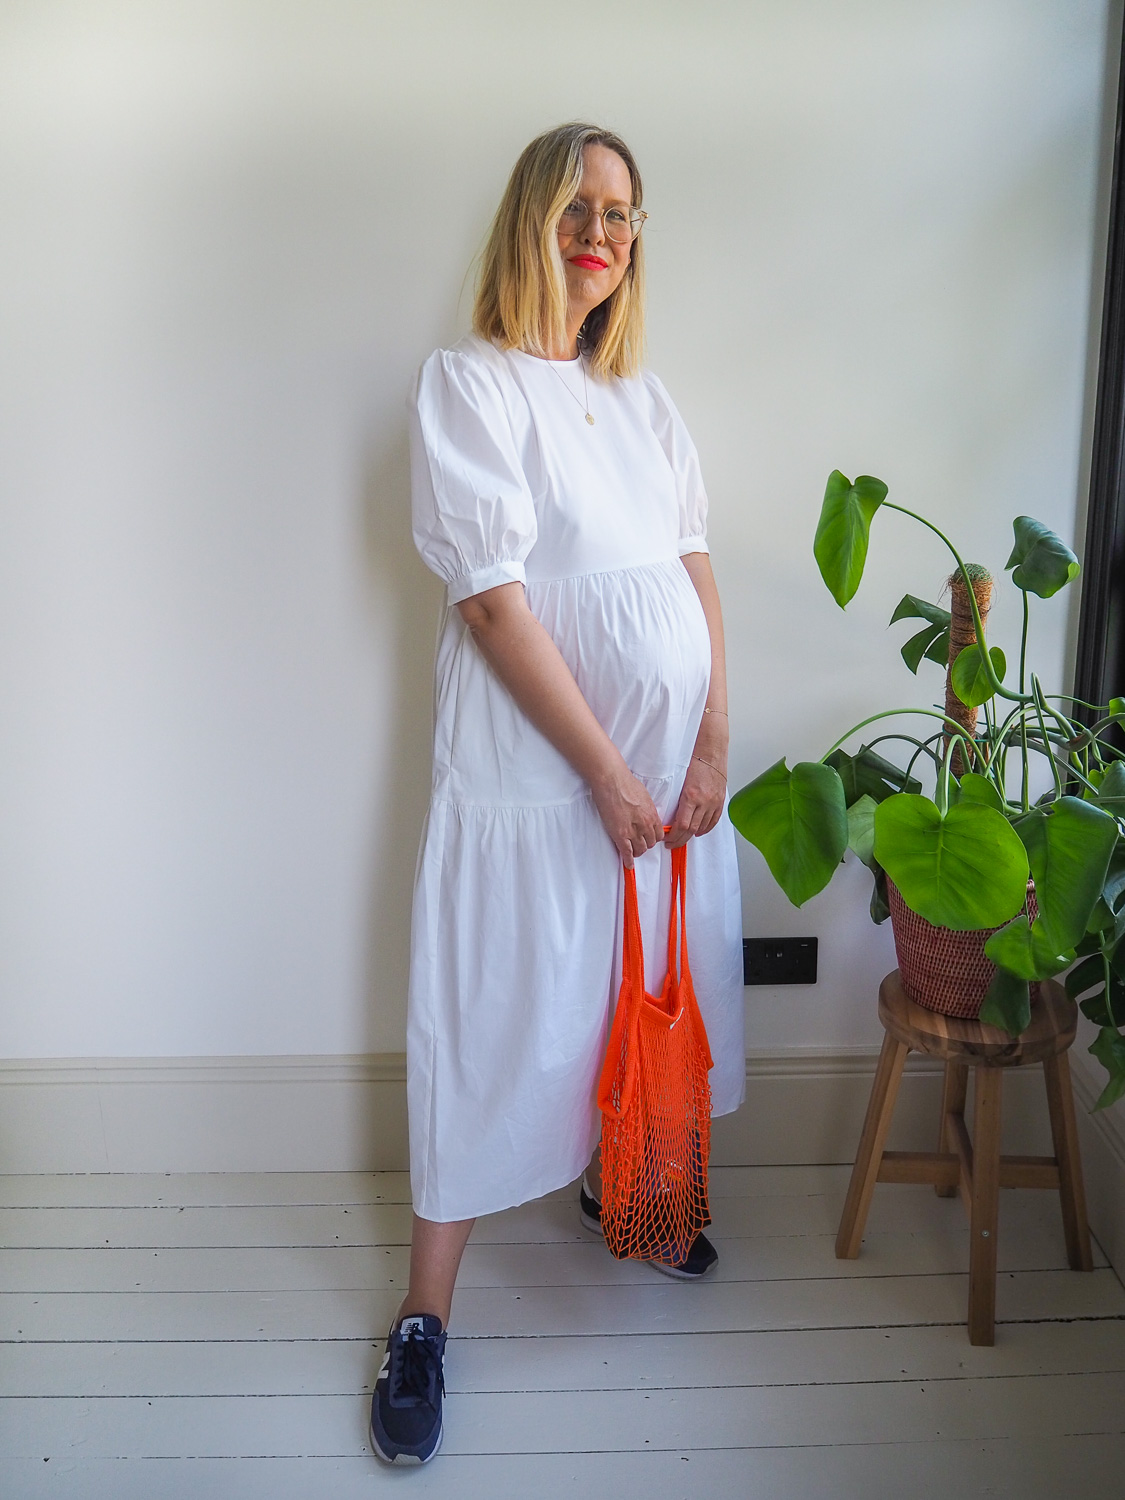 The Frugality talks maternity wear